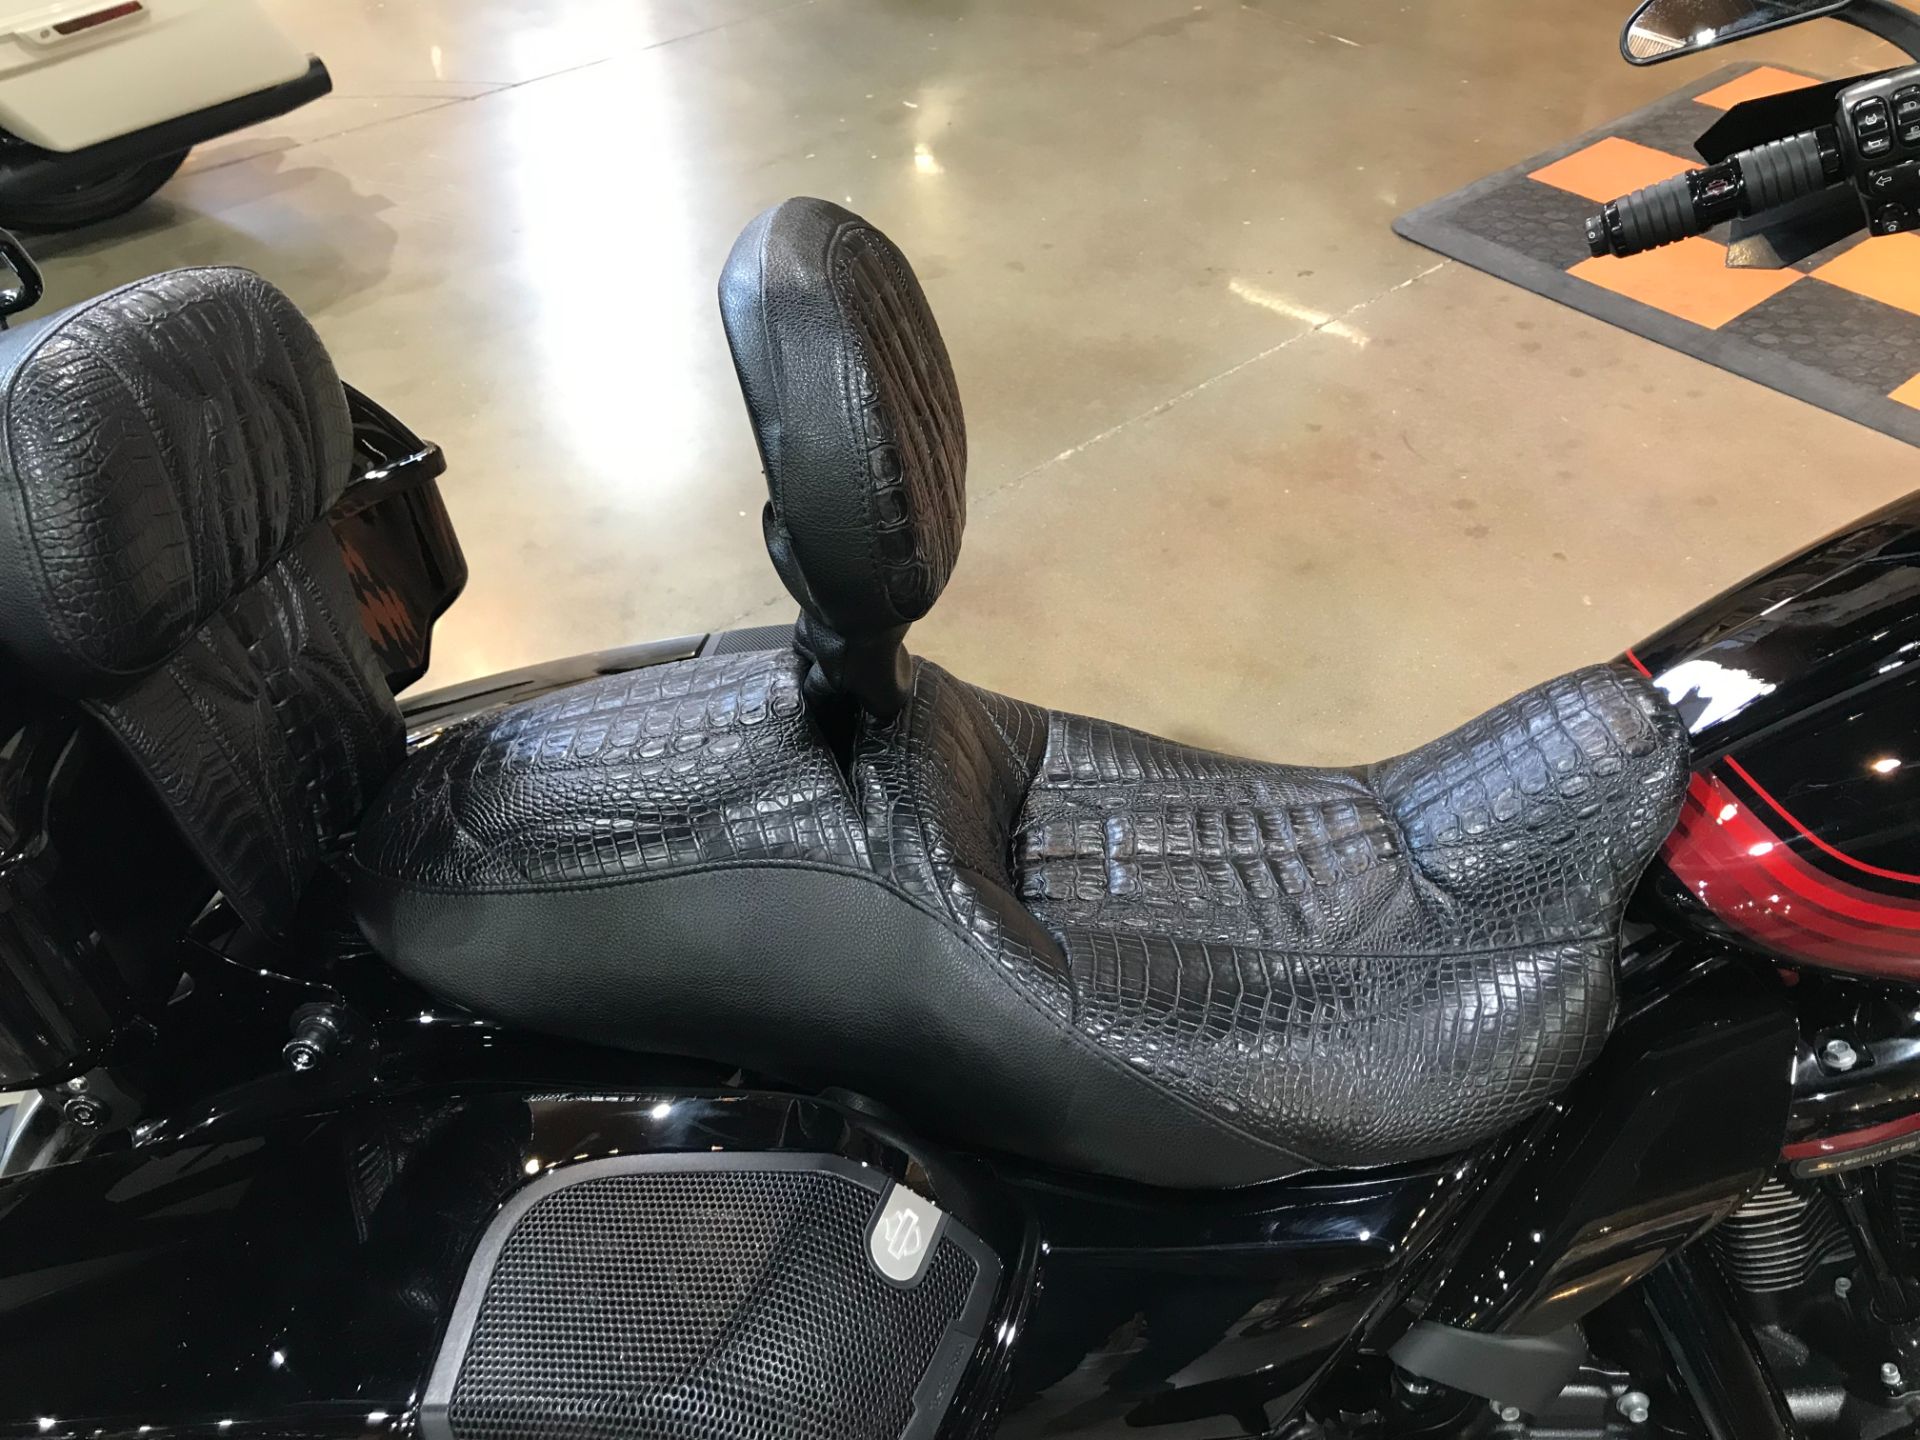 2021 Harley-Davidson CVO™ Road Glide® in Kingwood, Texas - Photo 7